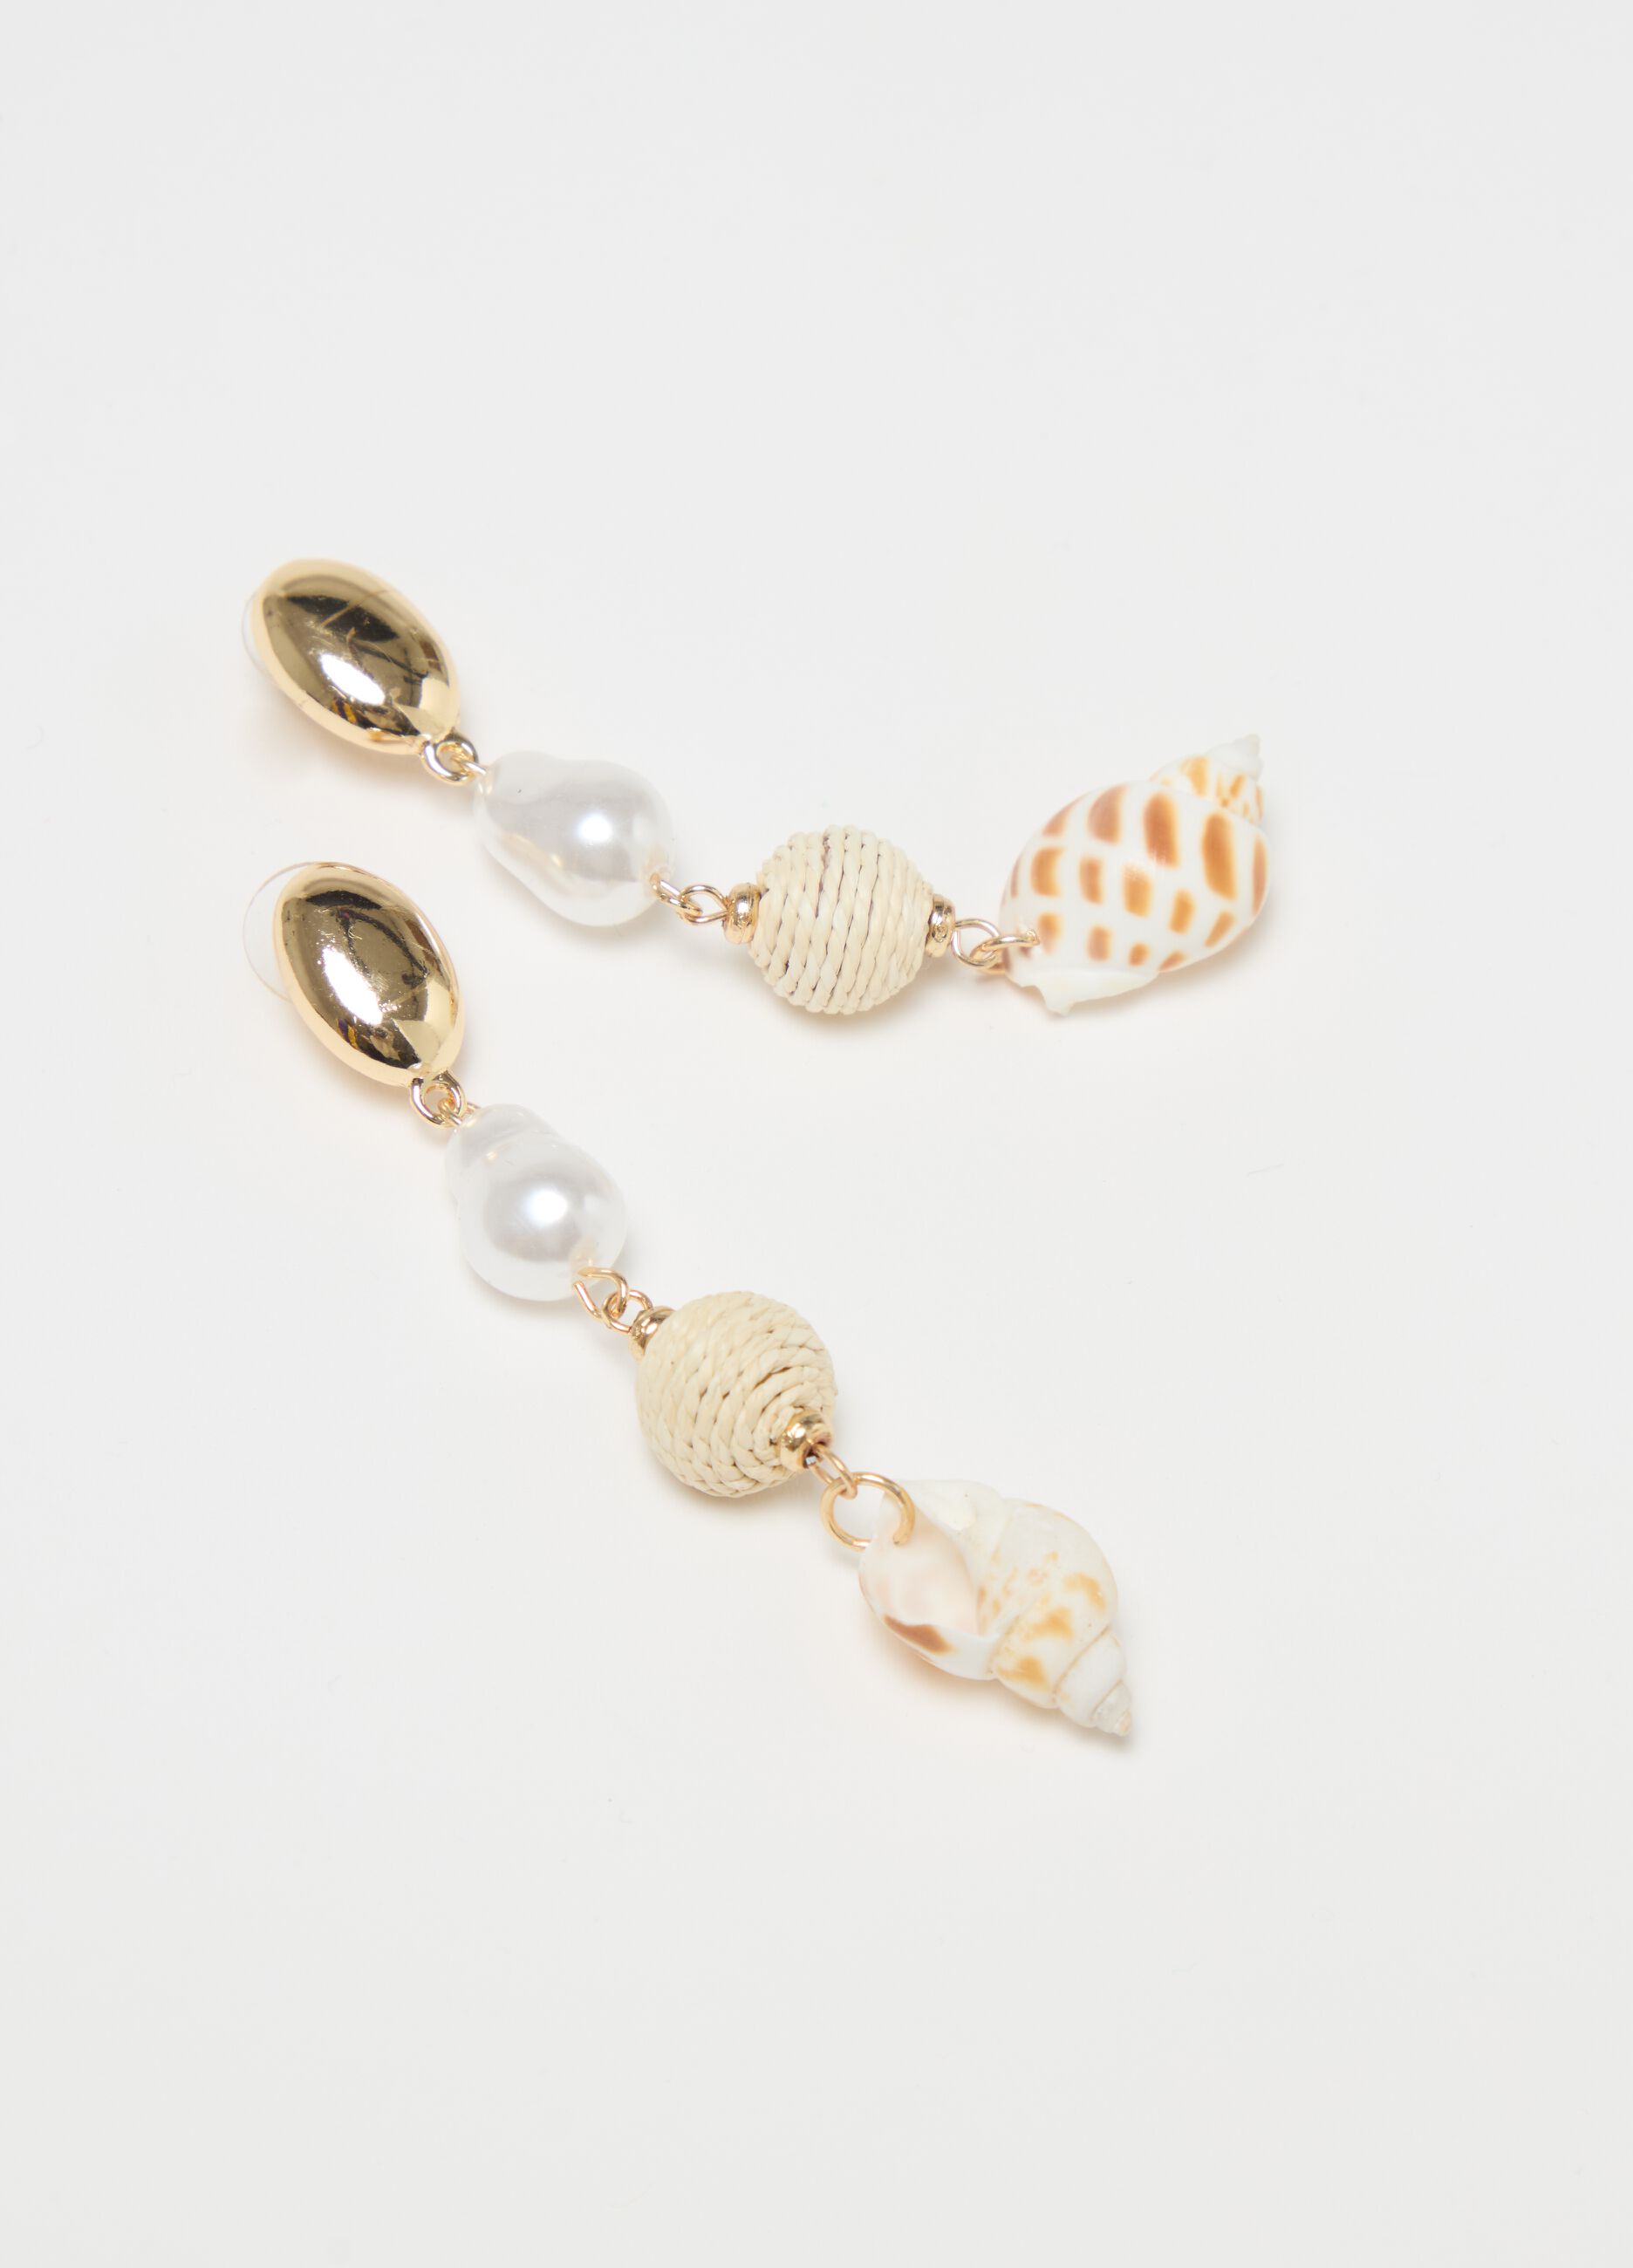 Pendant earrings with shells